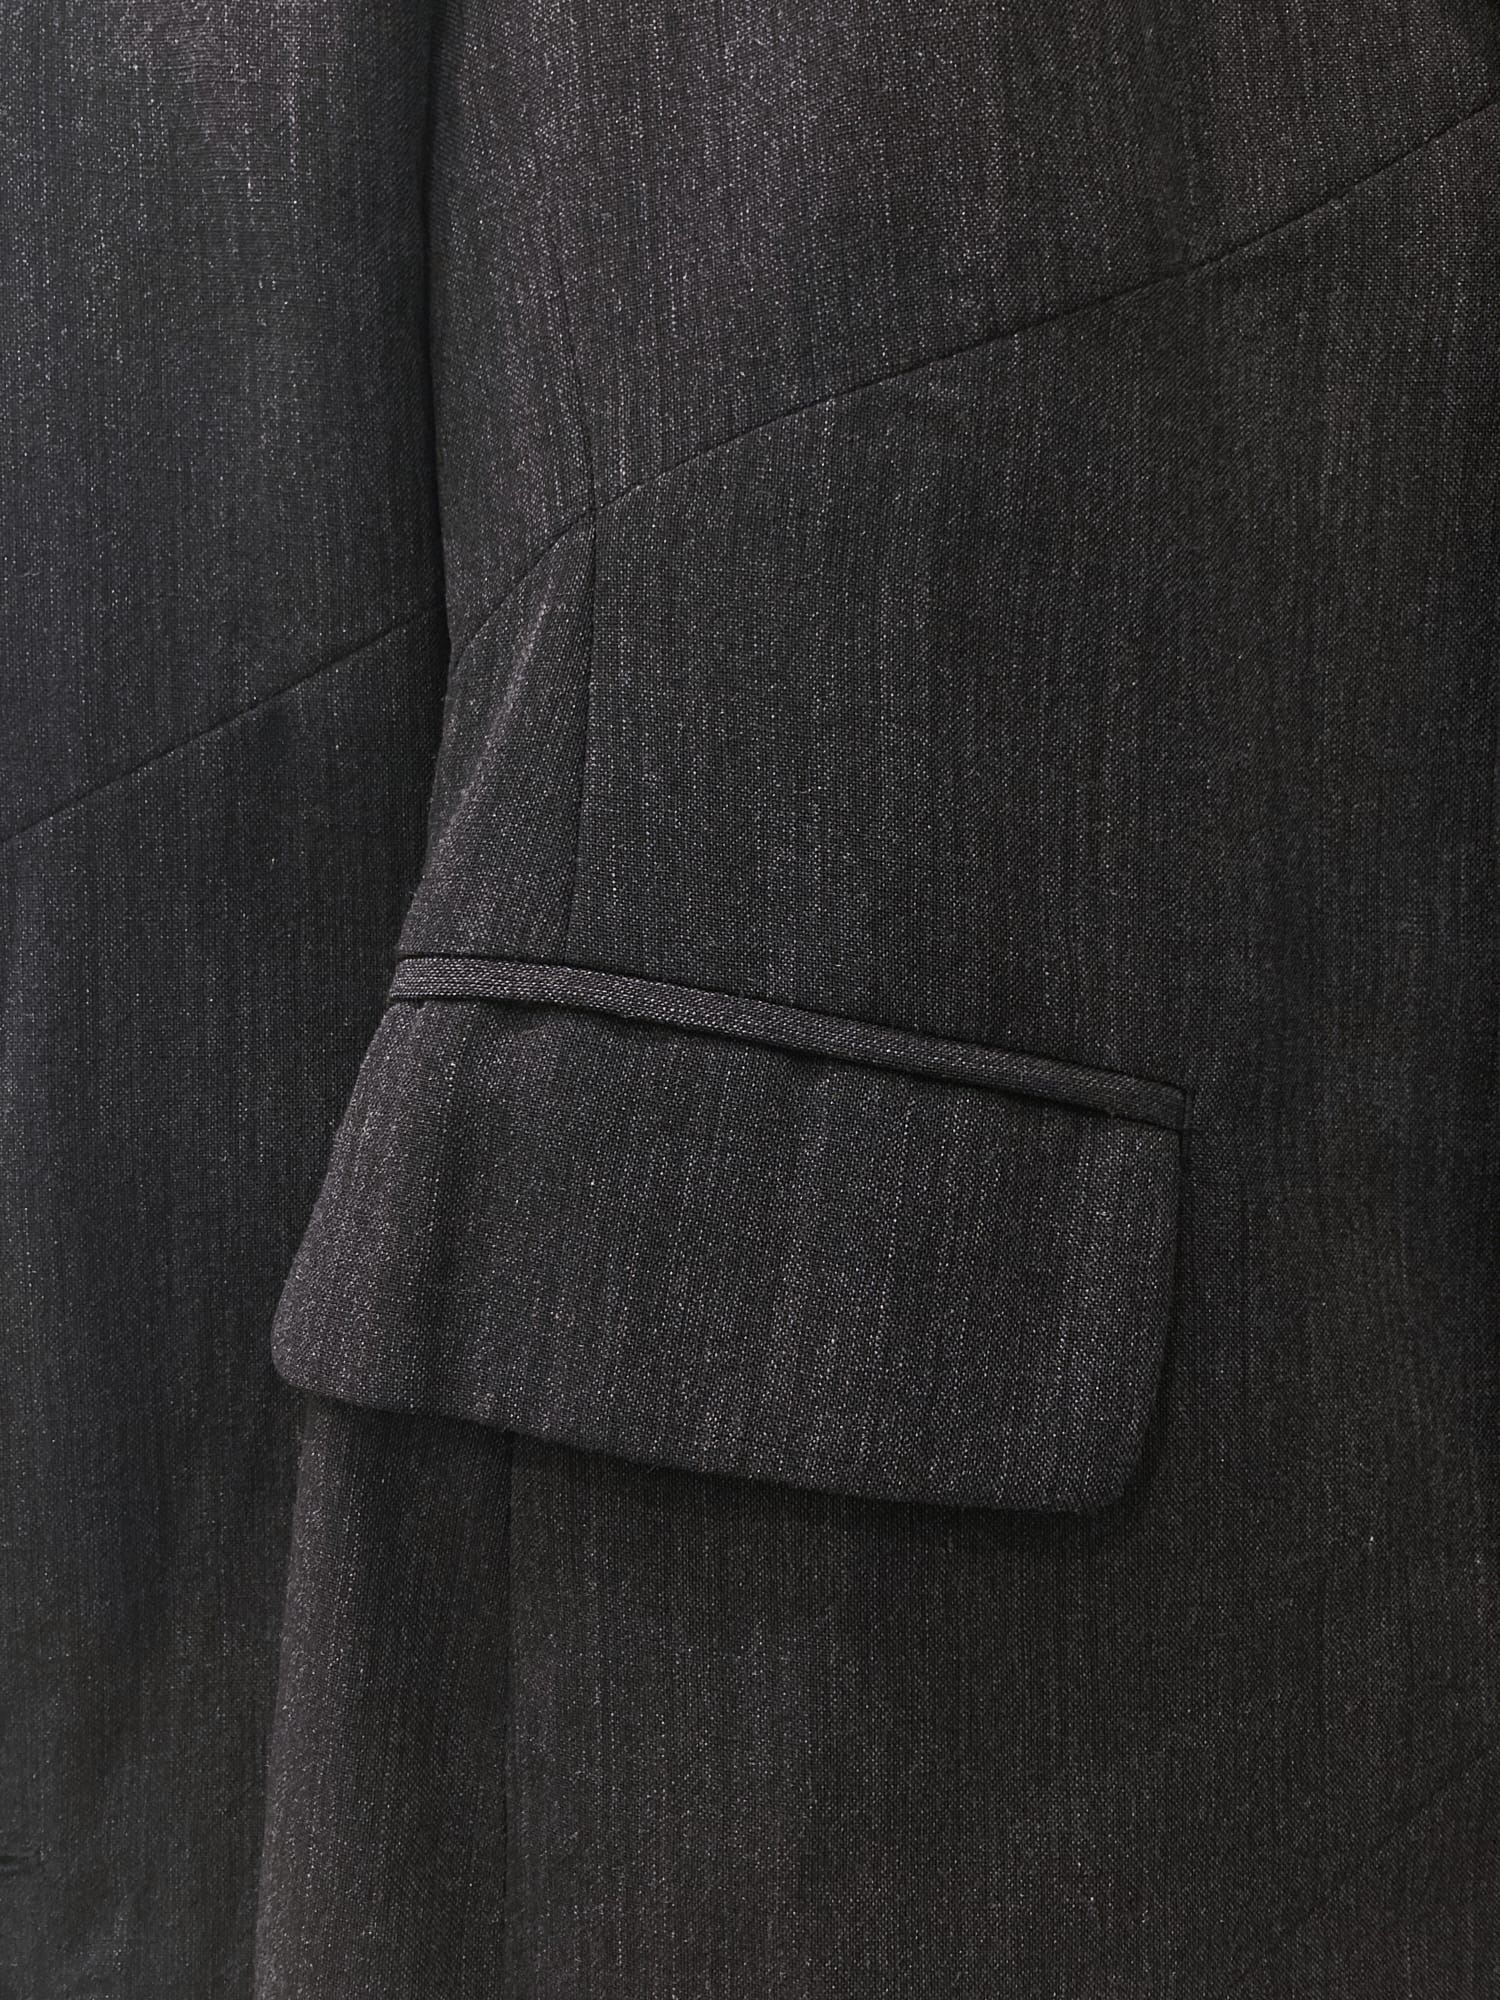 Dirk Bikkembergs Hommes Pour La Femme 1990s dark grey paneled wool blazer